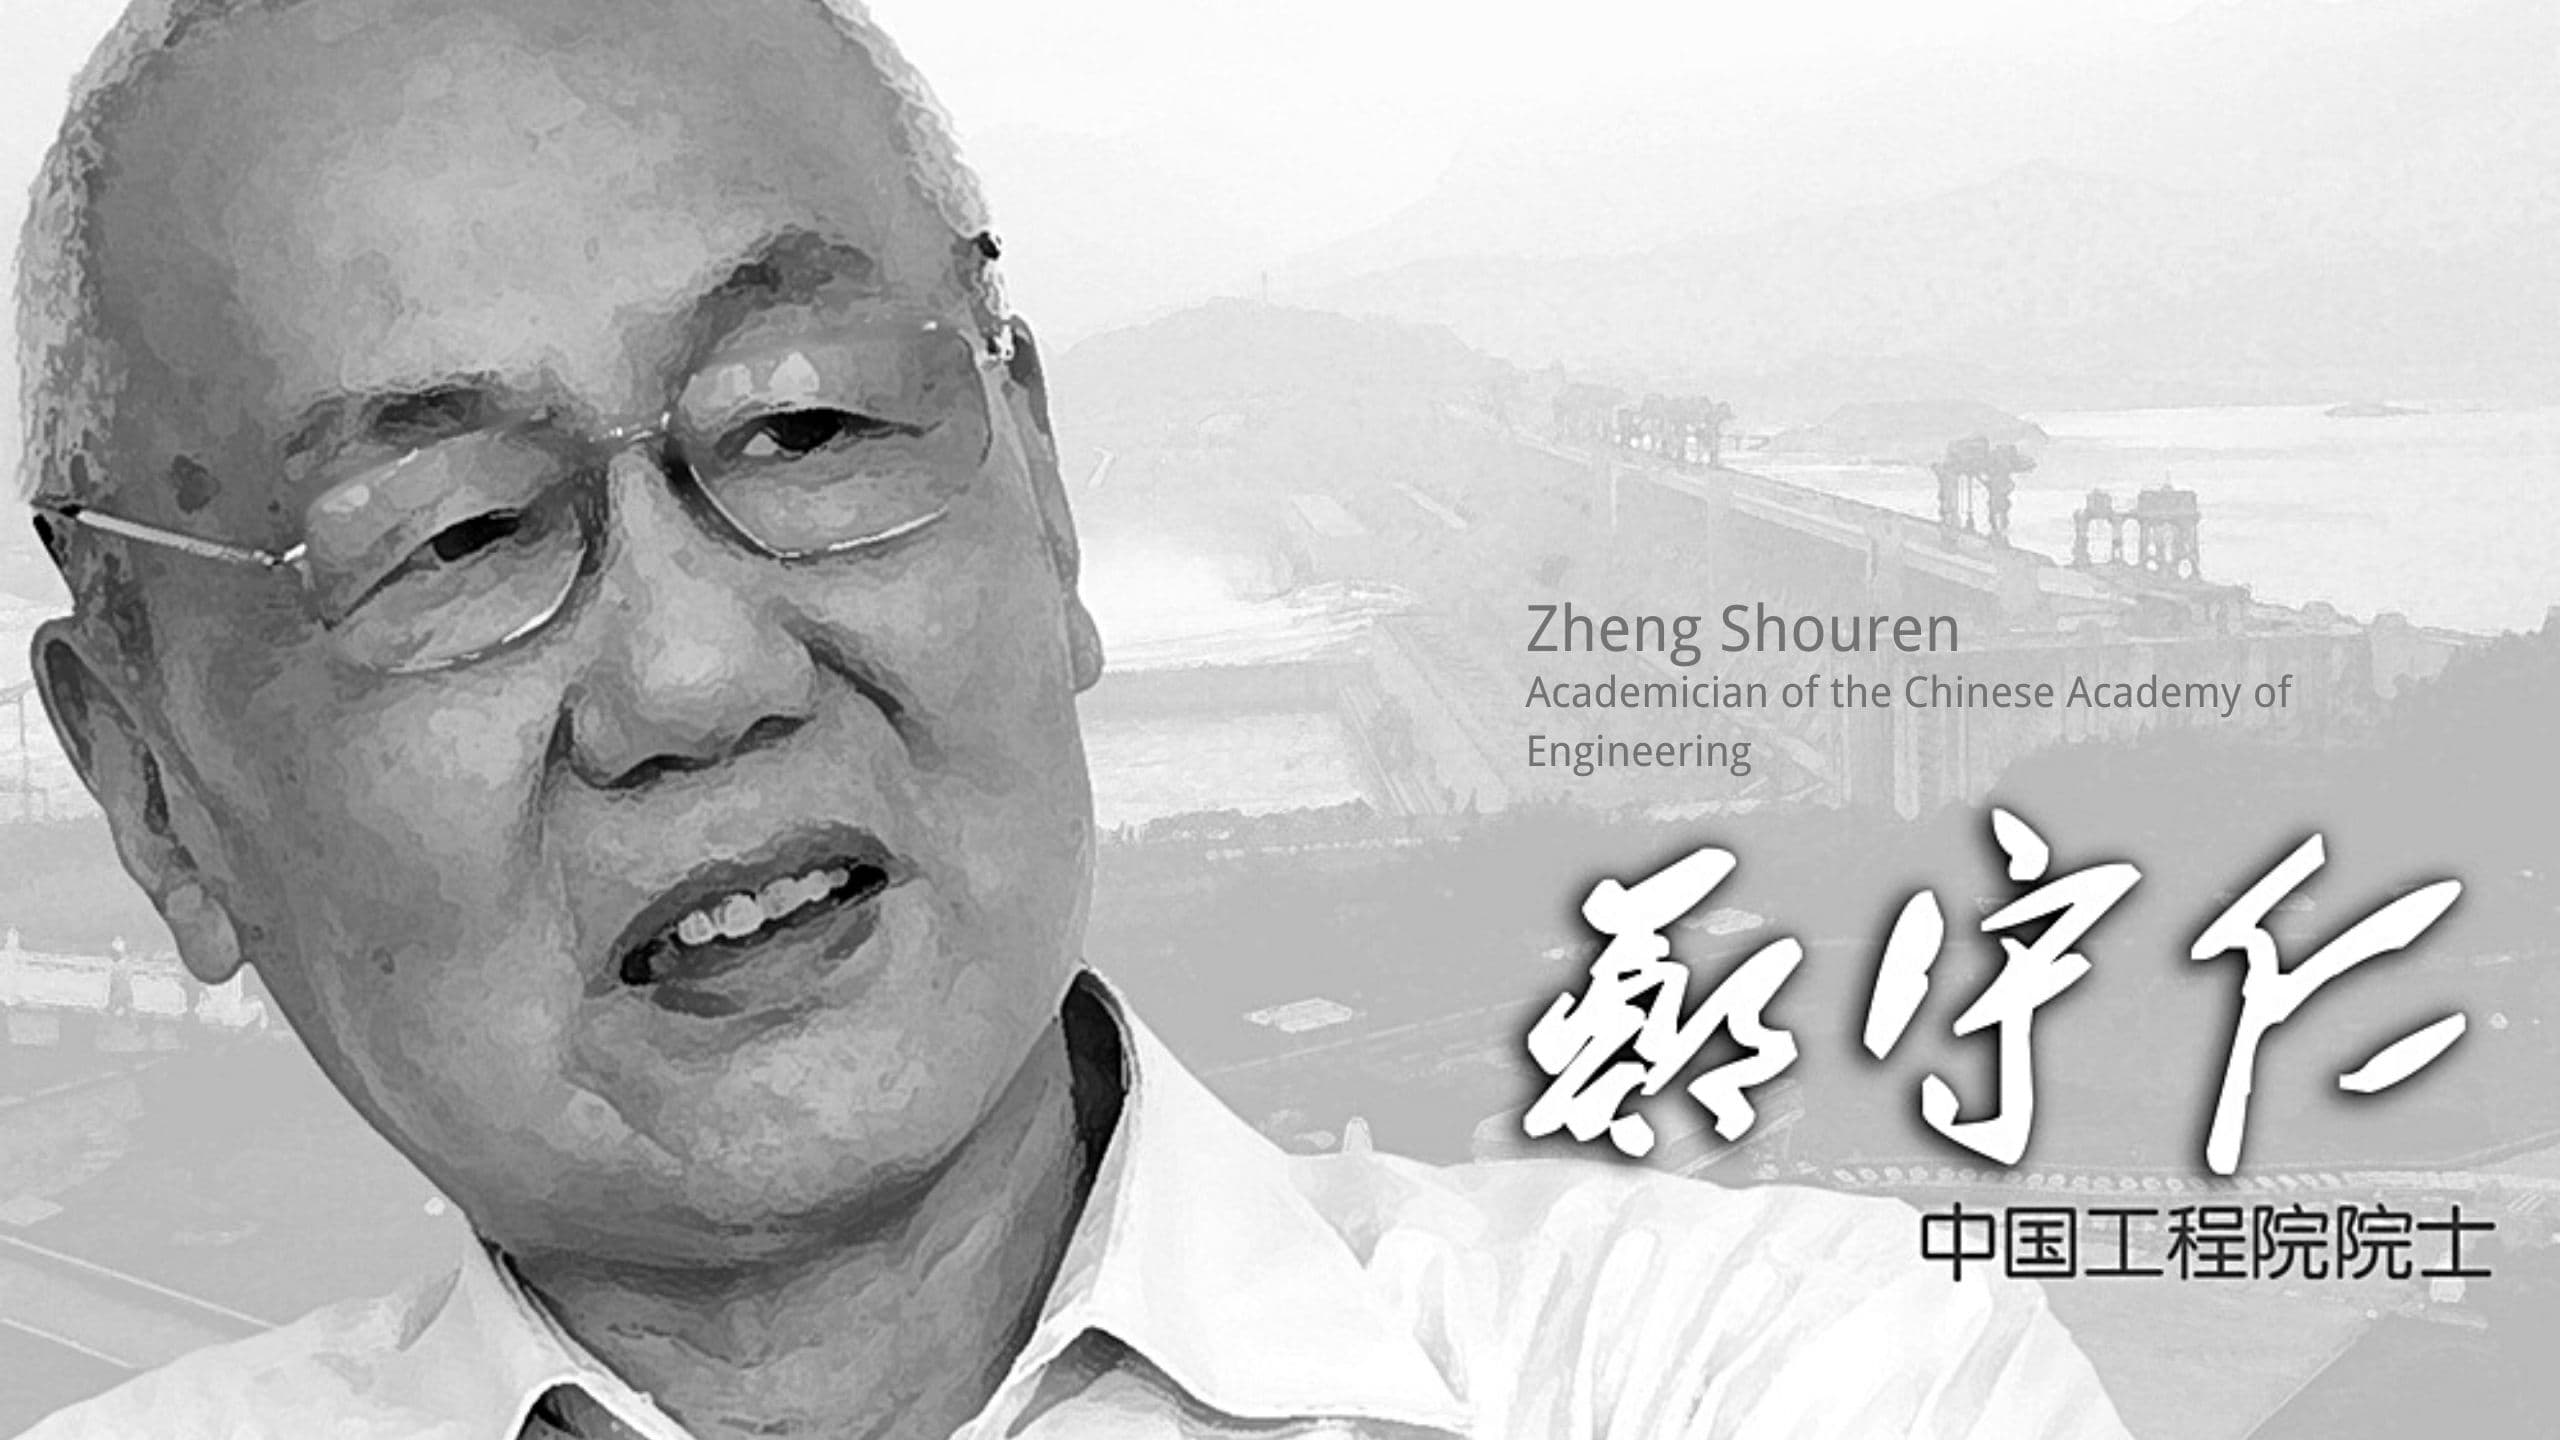 Prof. Zheng Shouren